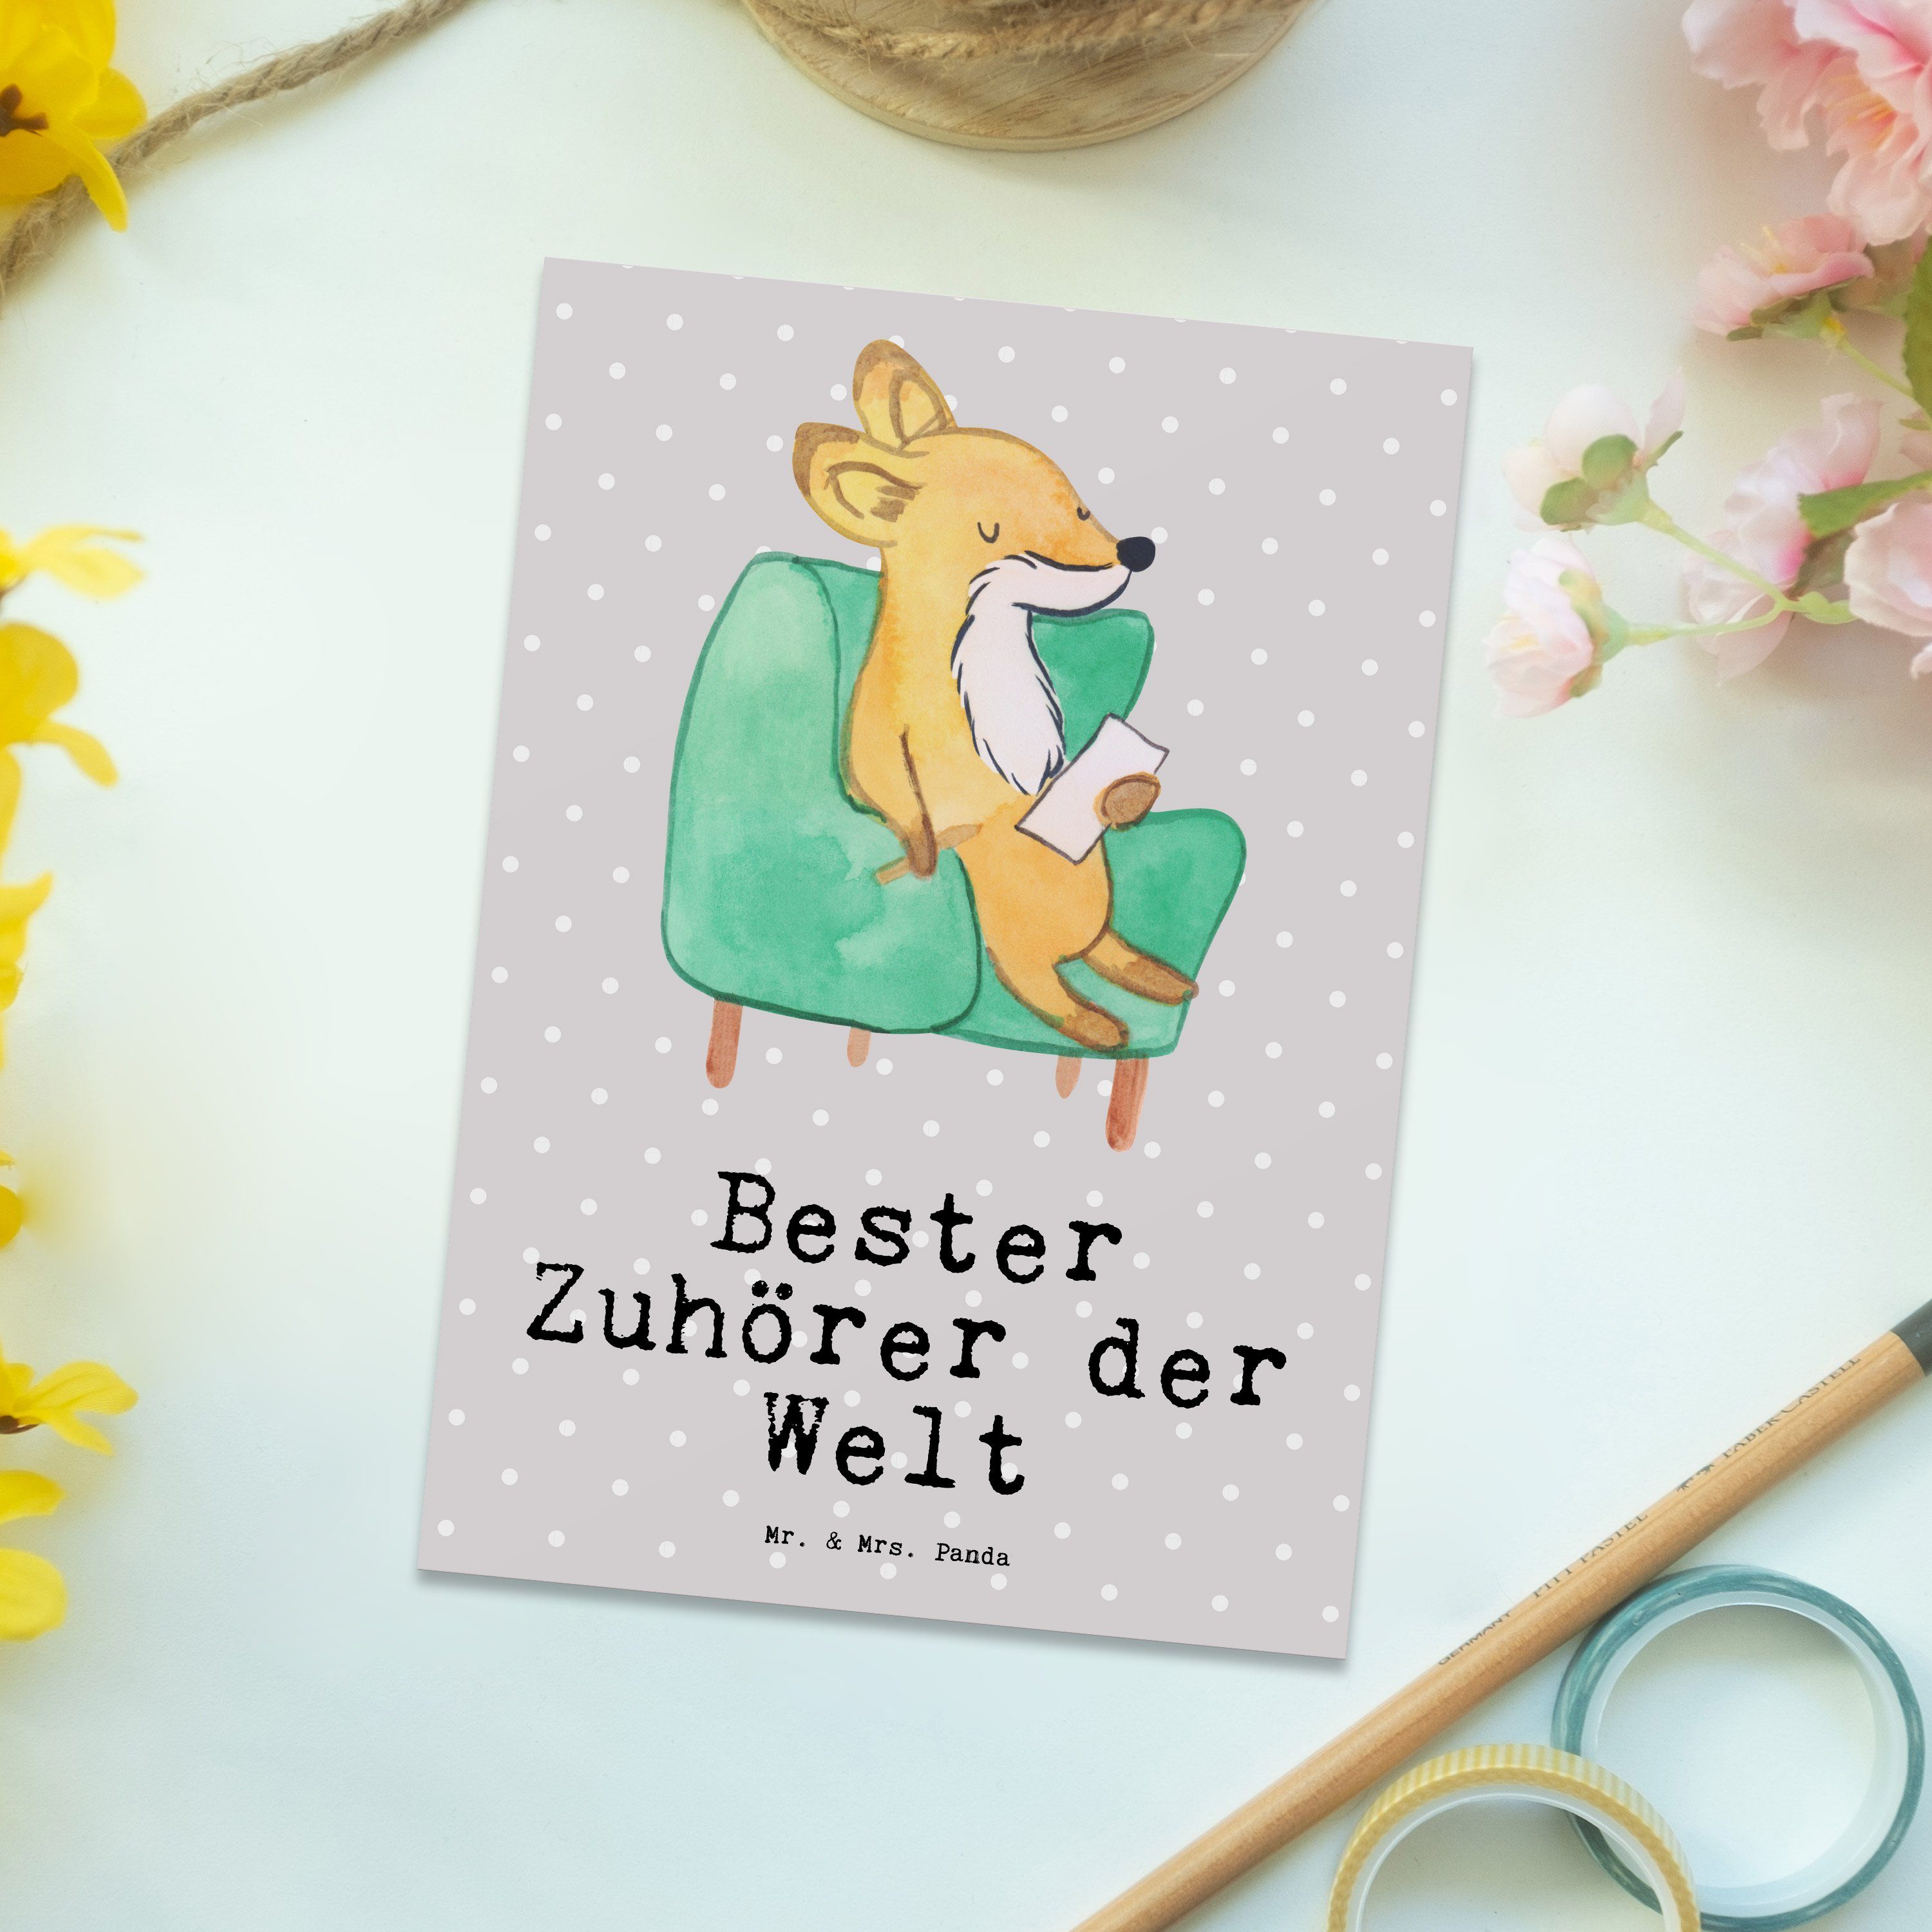 Fuchs Welt & Geschenk, Panda Postkarte Grau Zuhörer - Mrs. Pastell der Bester Mr. für, Danke -